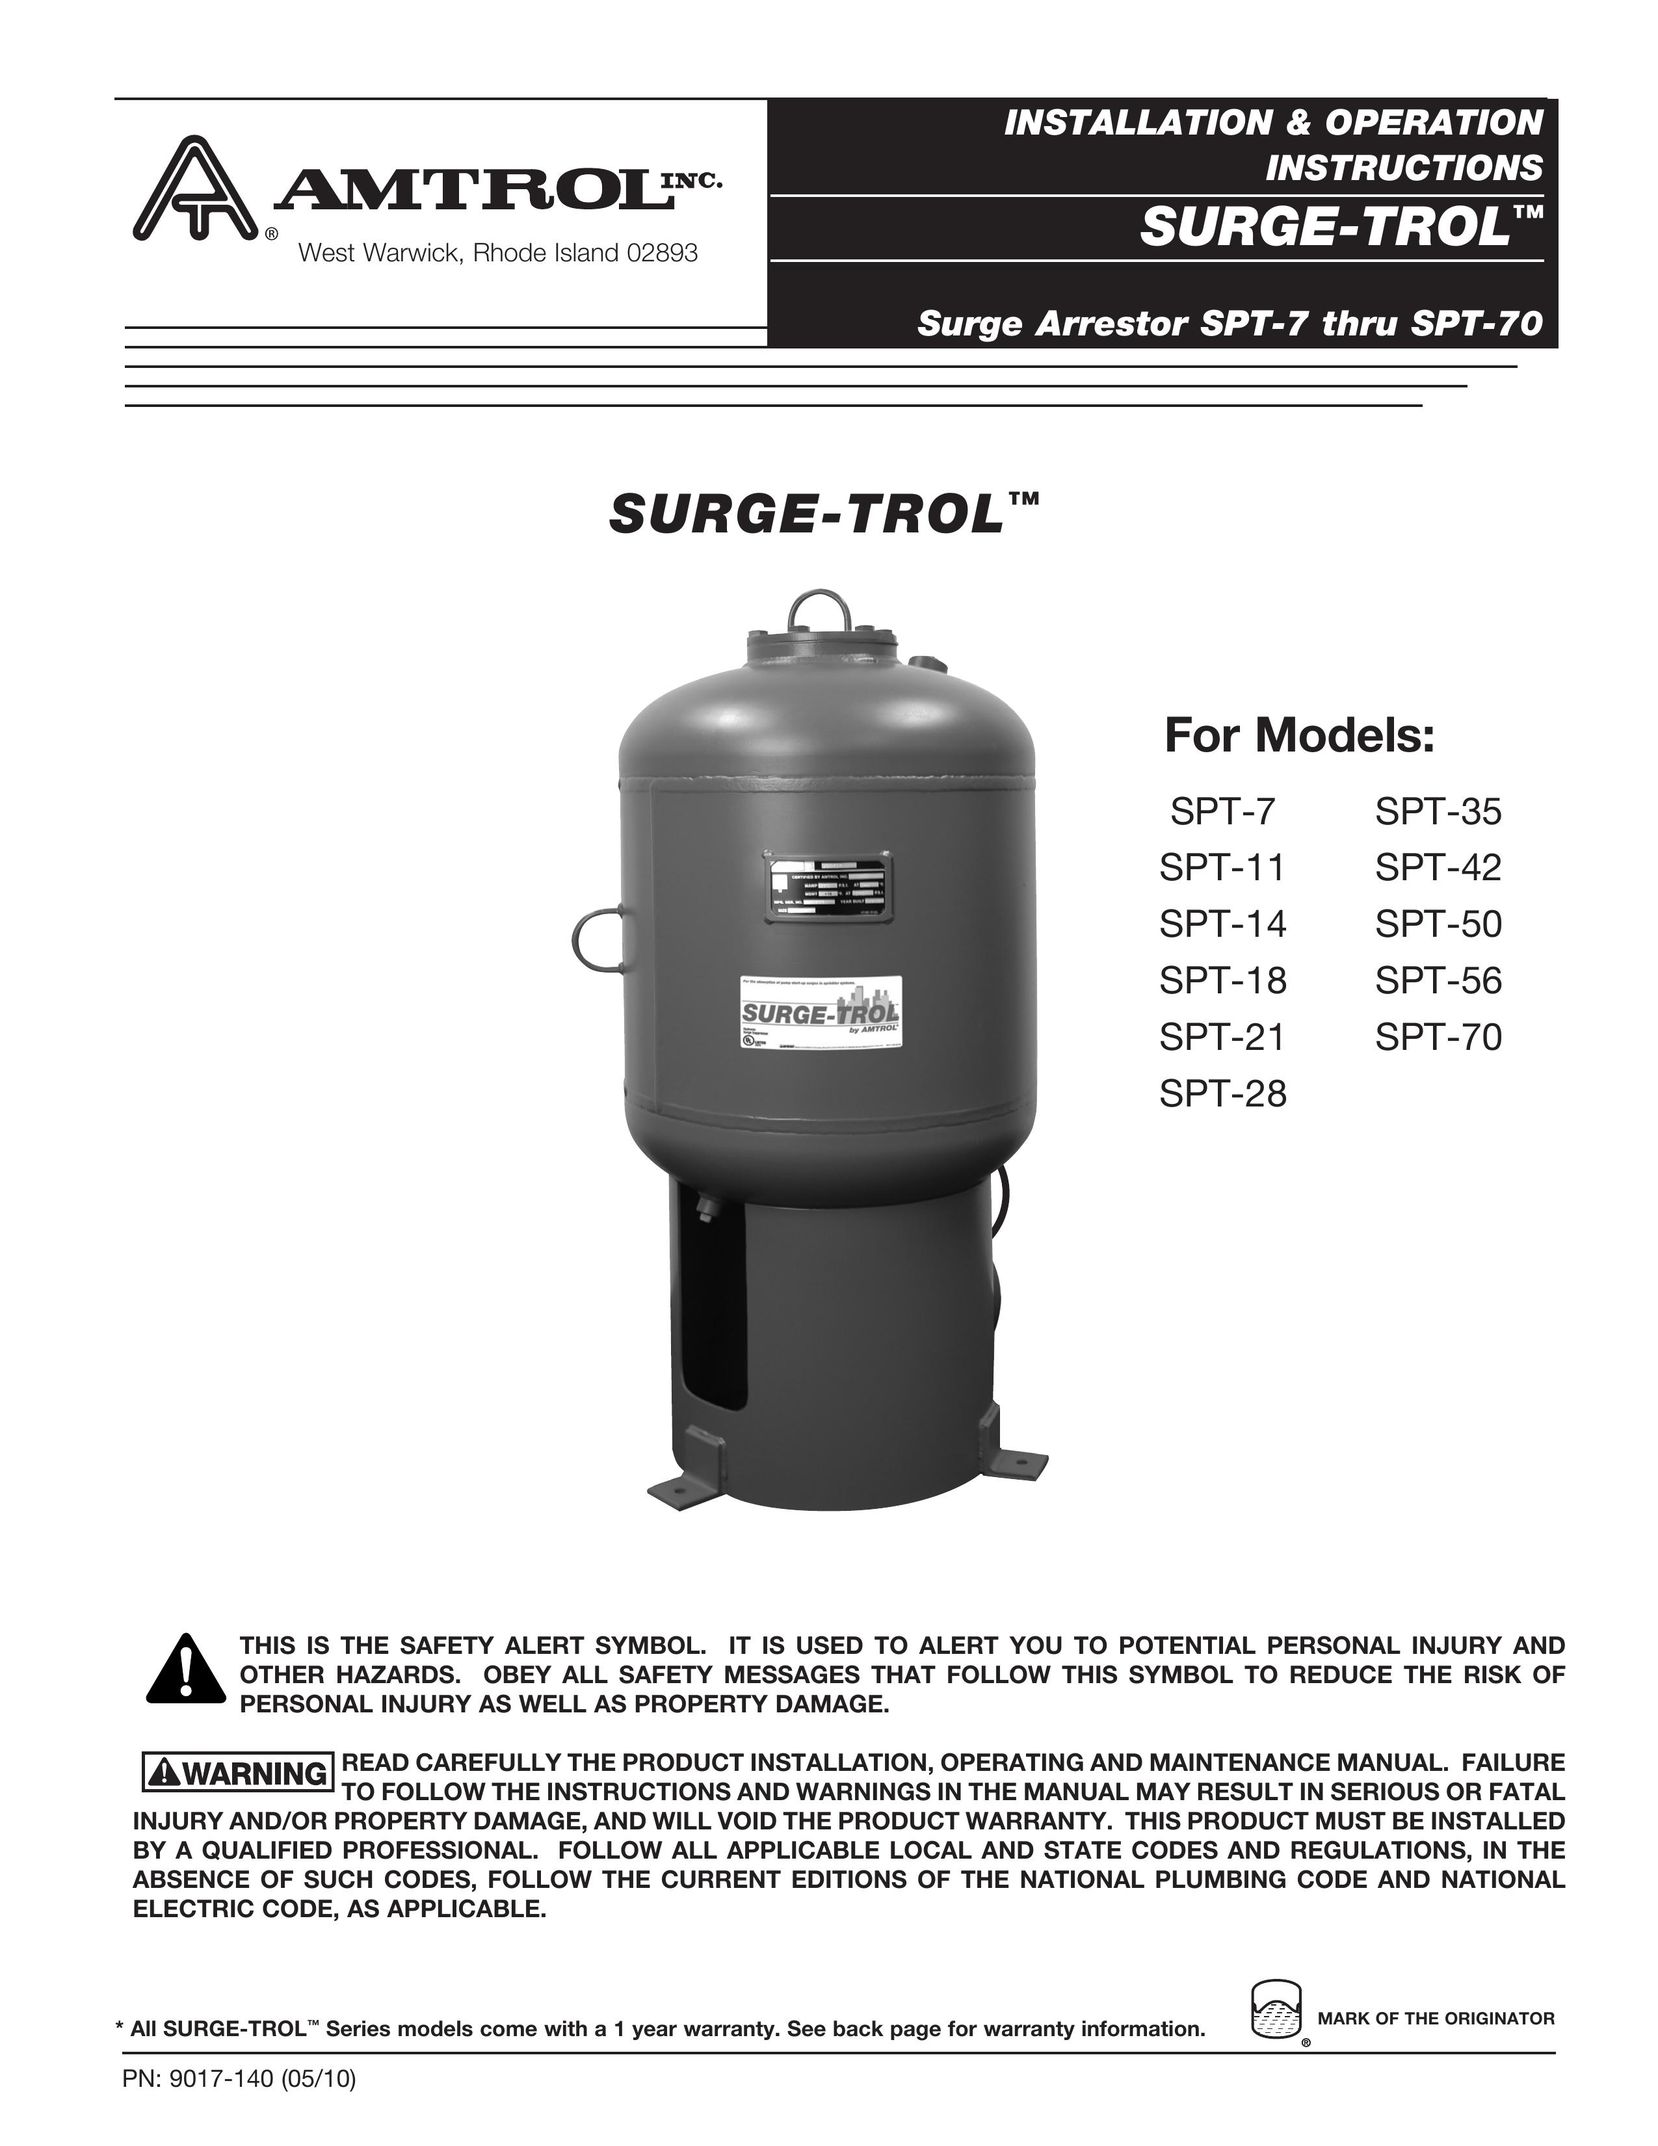 Amtrol SPT-11 Surge Protector User Manual